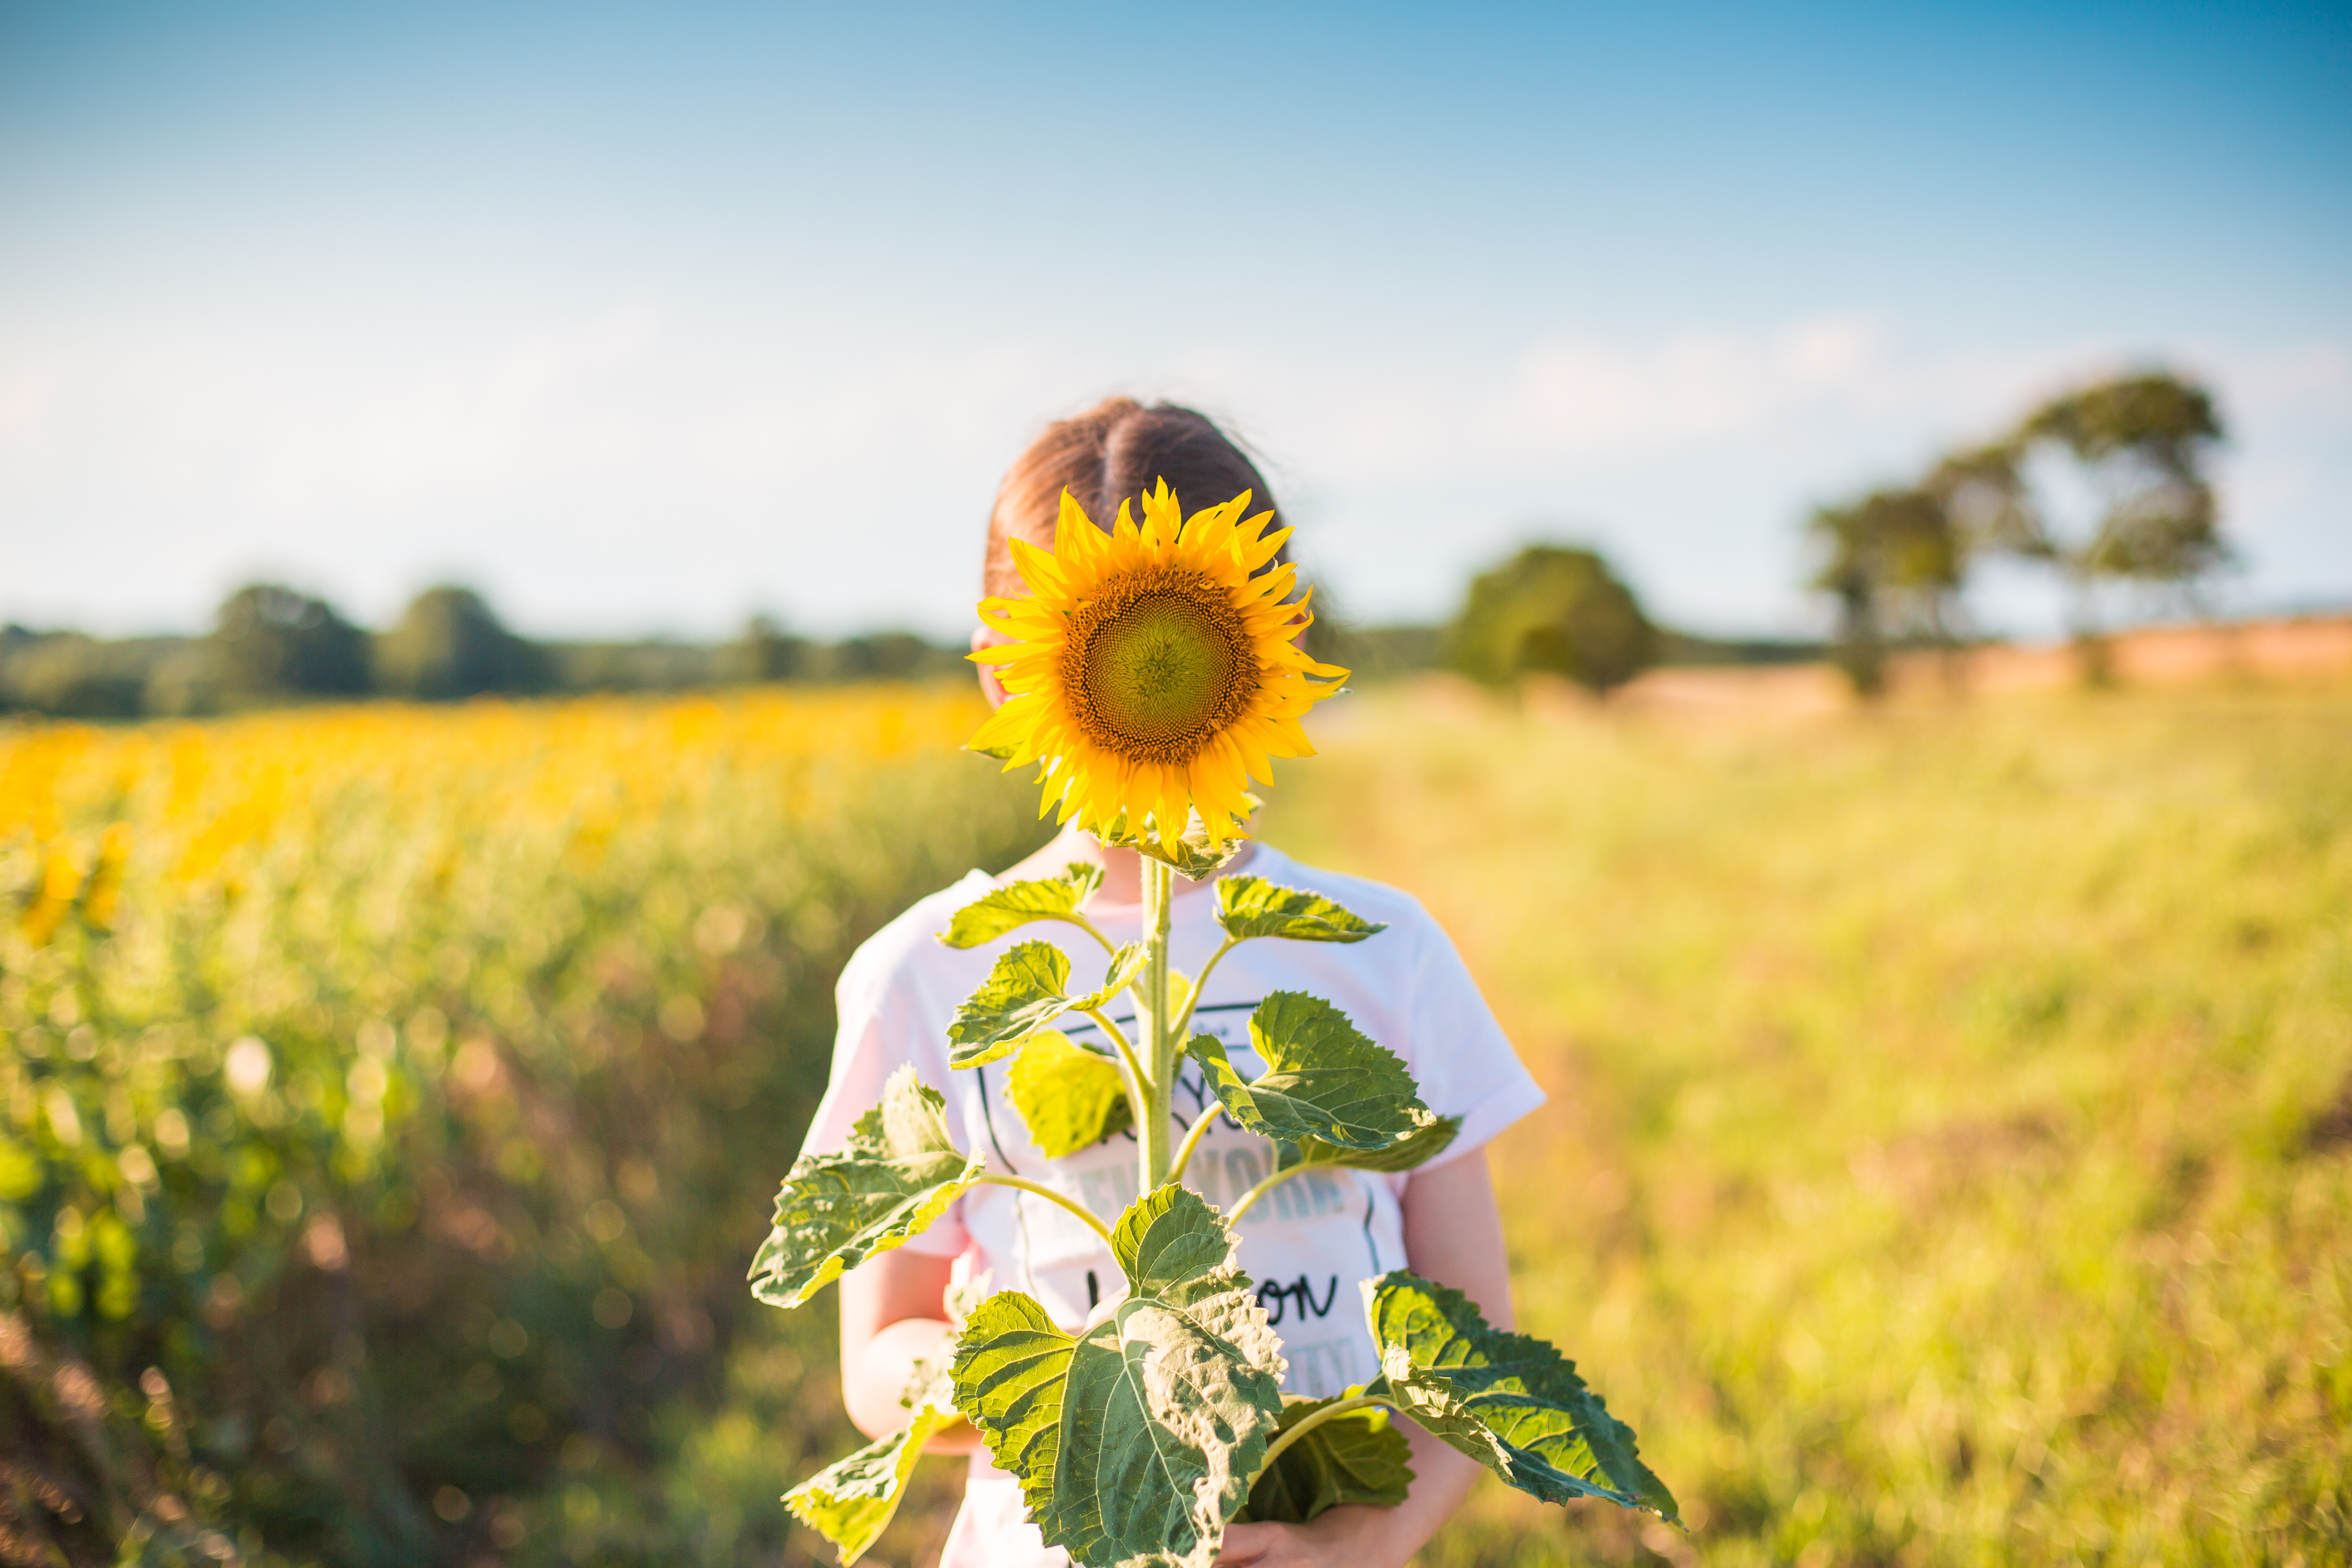 little-girl-with-sunflower-in-a-sunflower-field-picjumbo-com